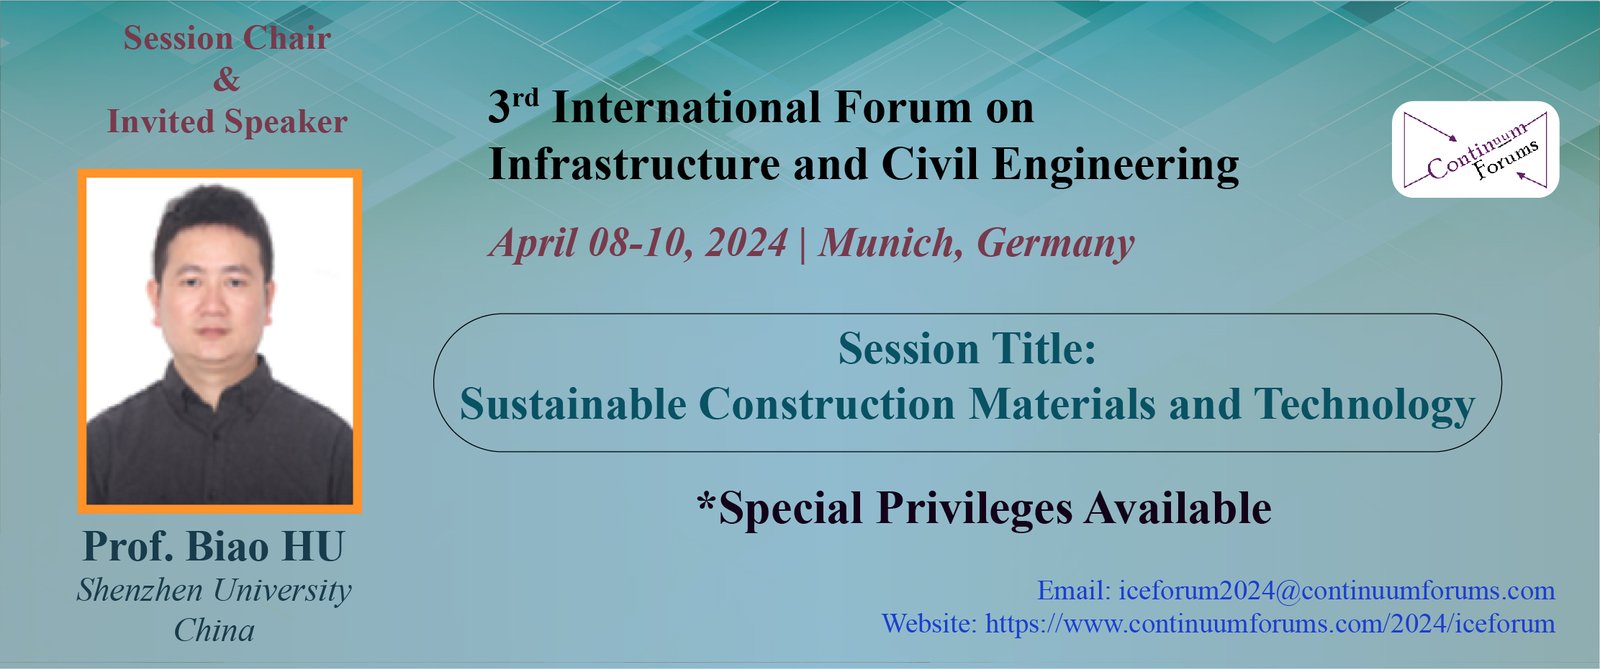 ICEFORUM2024 Infrastructure and Civil Engineering Forum 2024 3rd